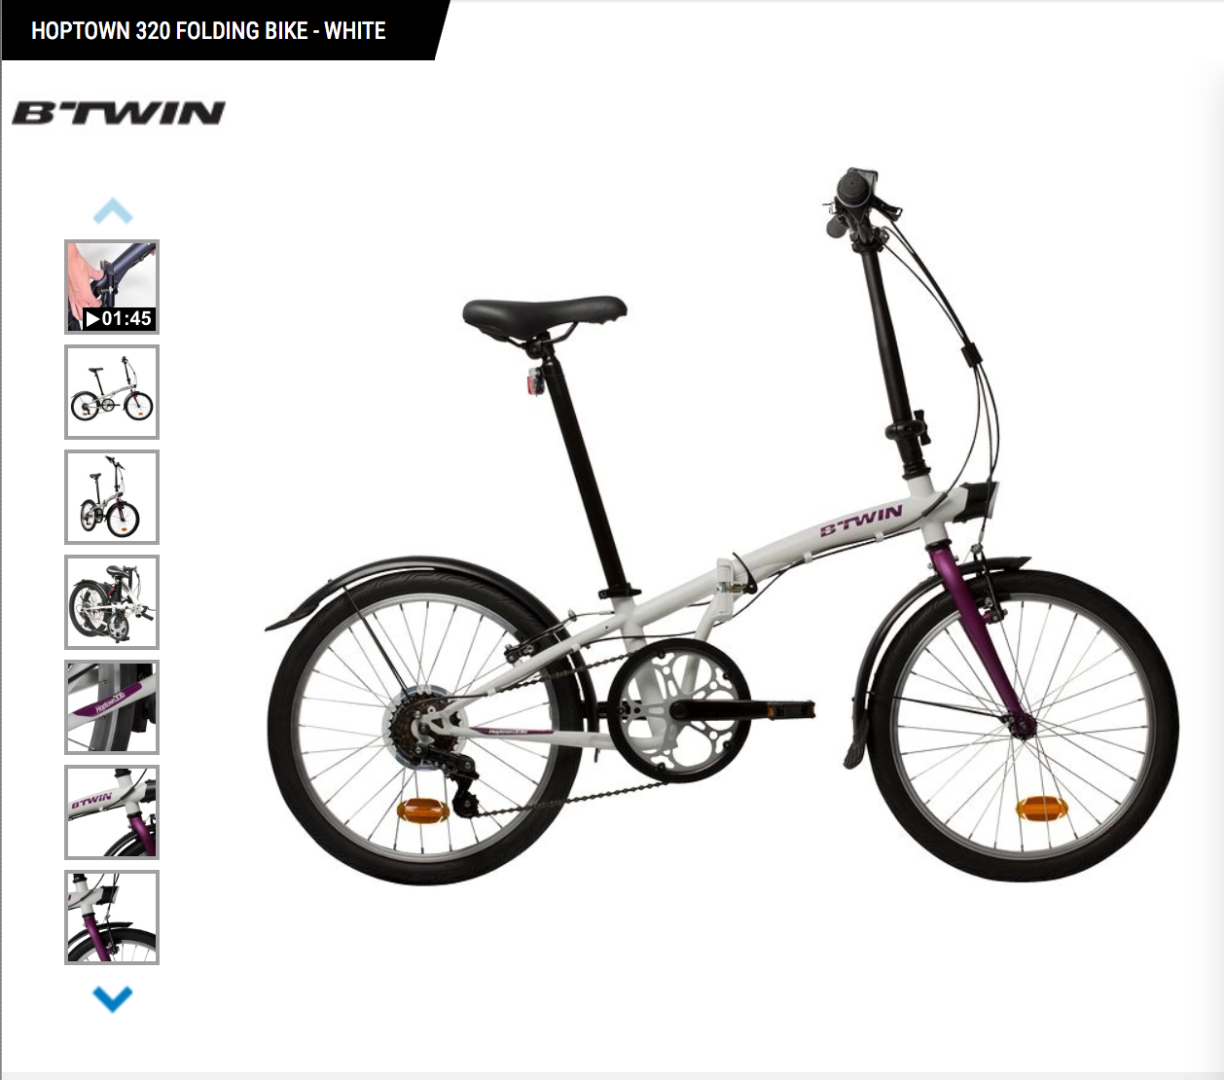 btwin hoptown 320 folding bike